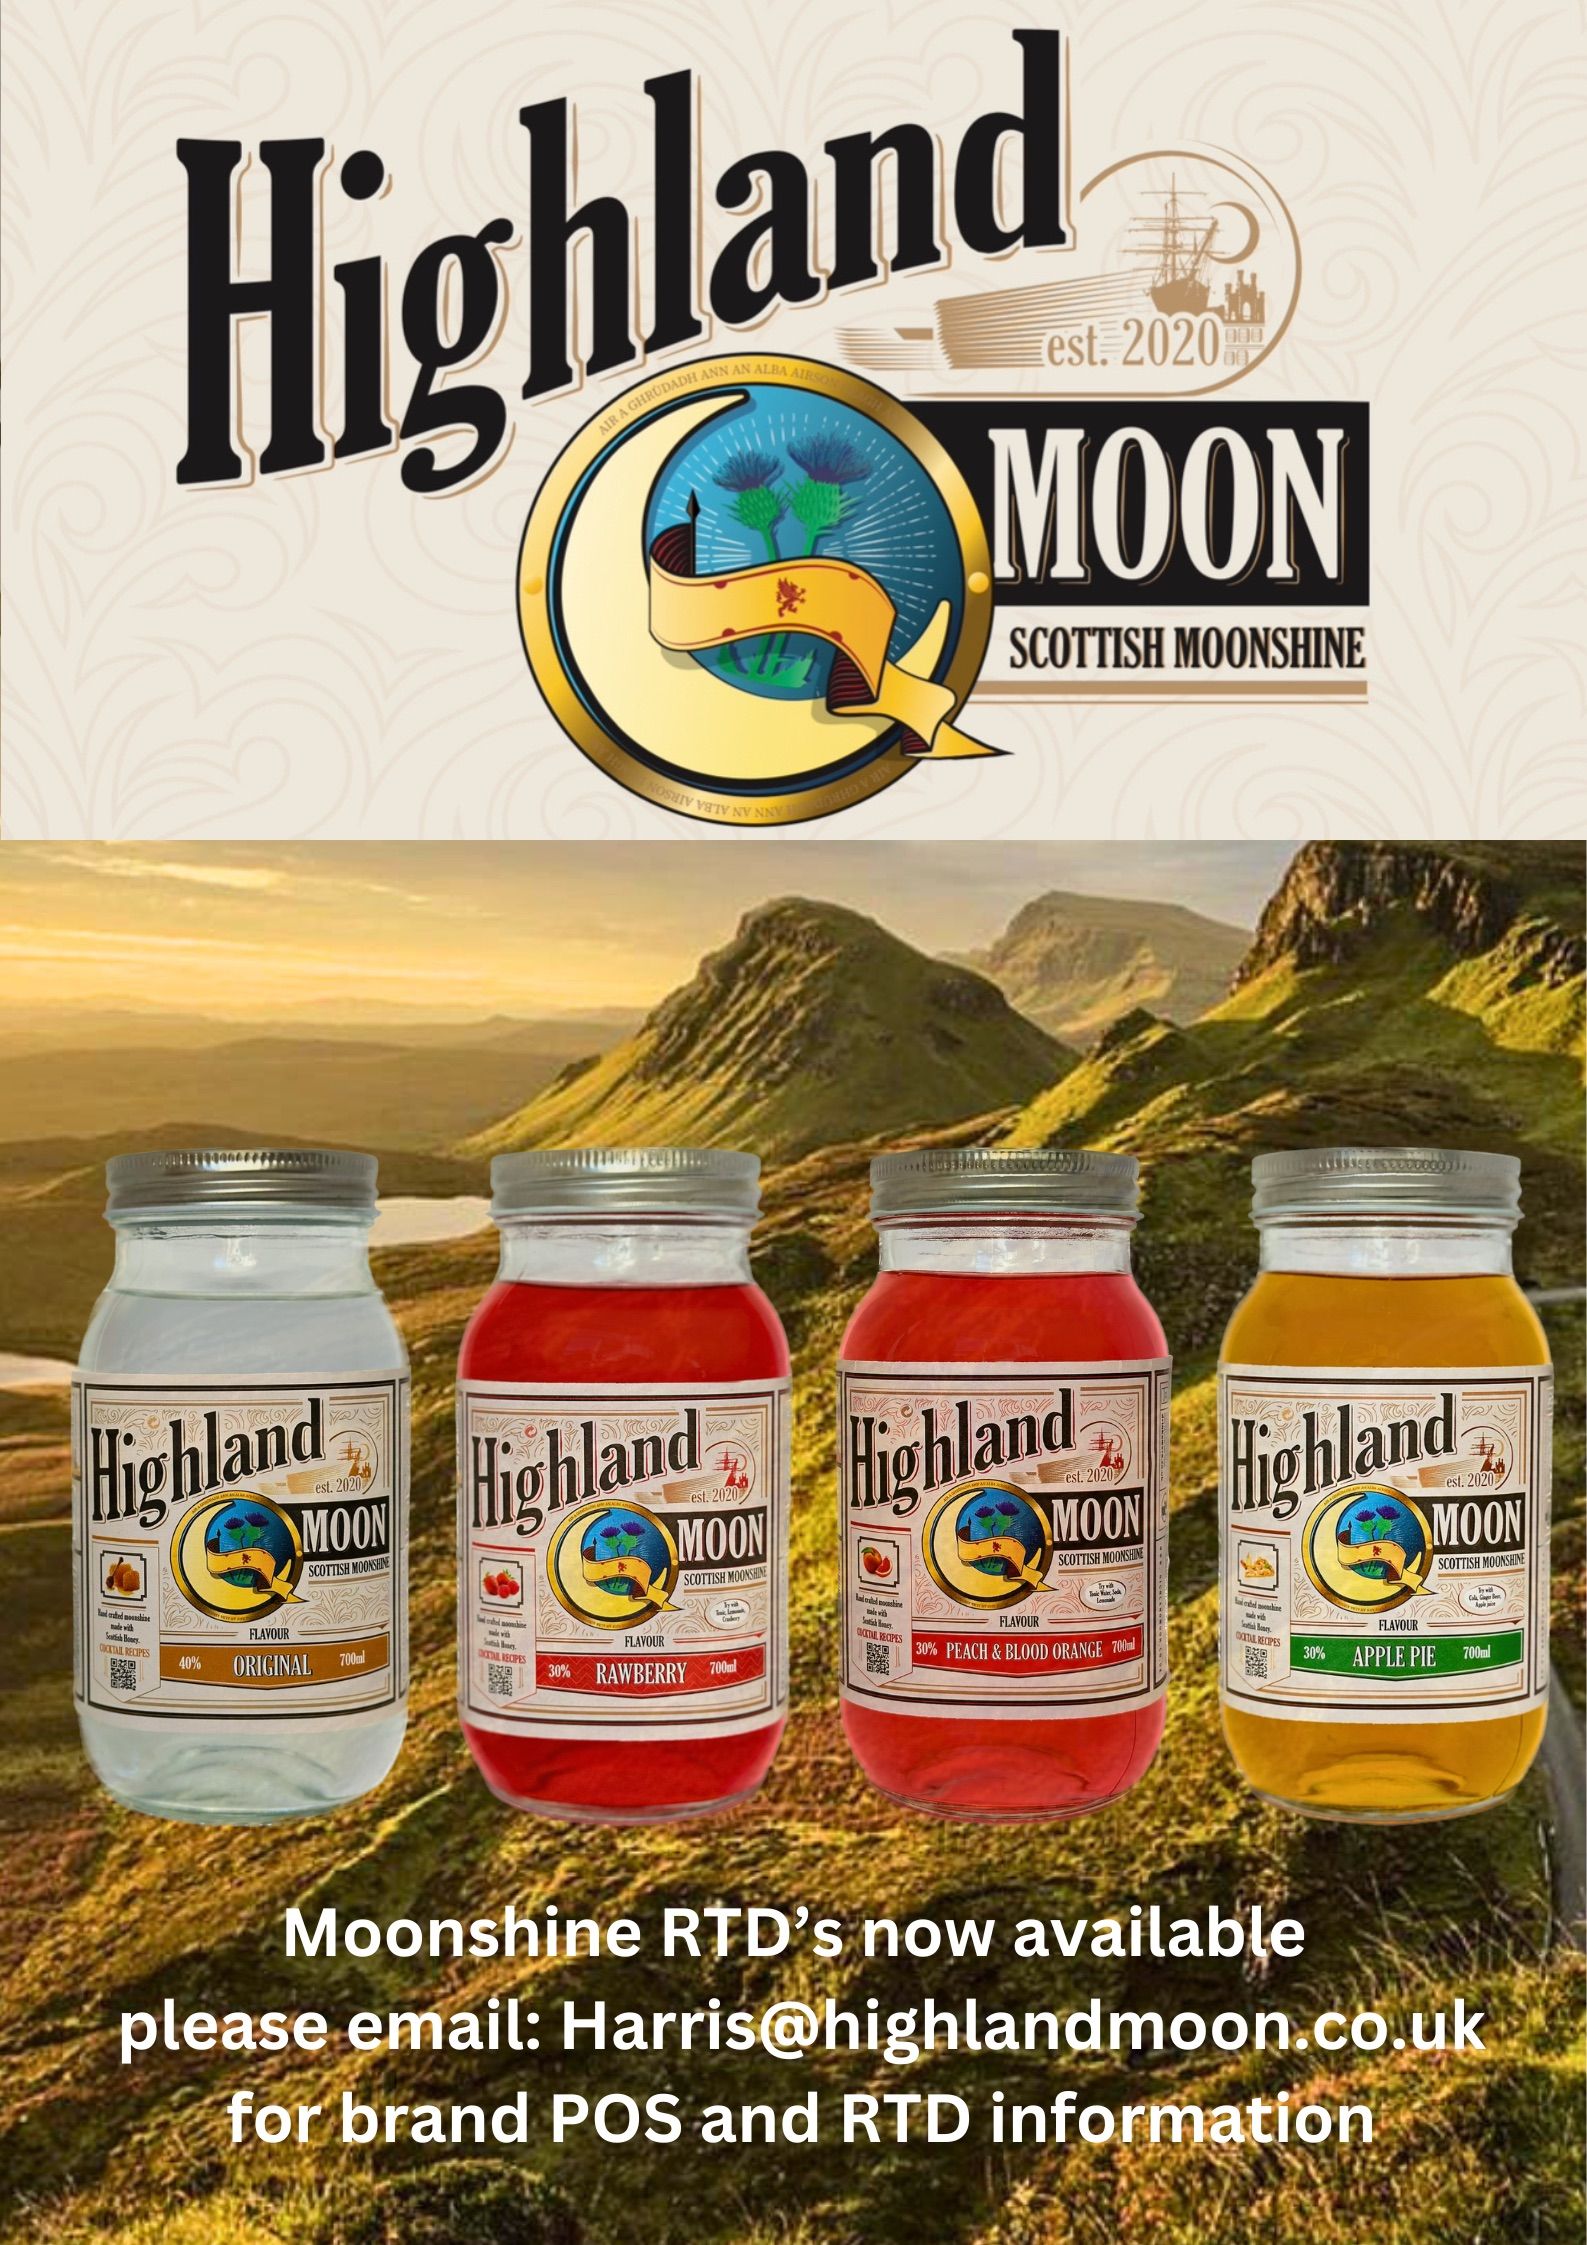 Original Moonshine